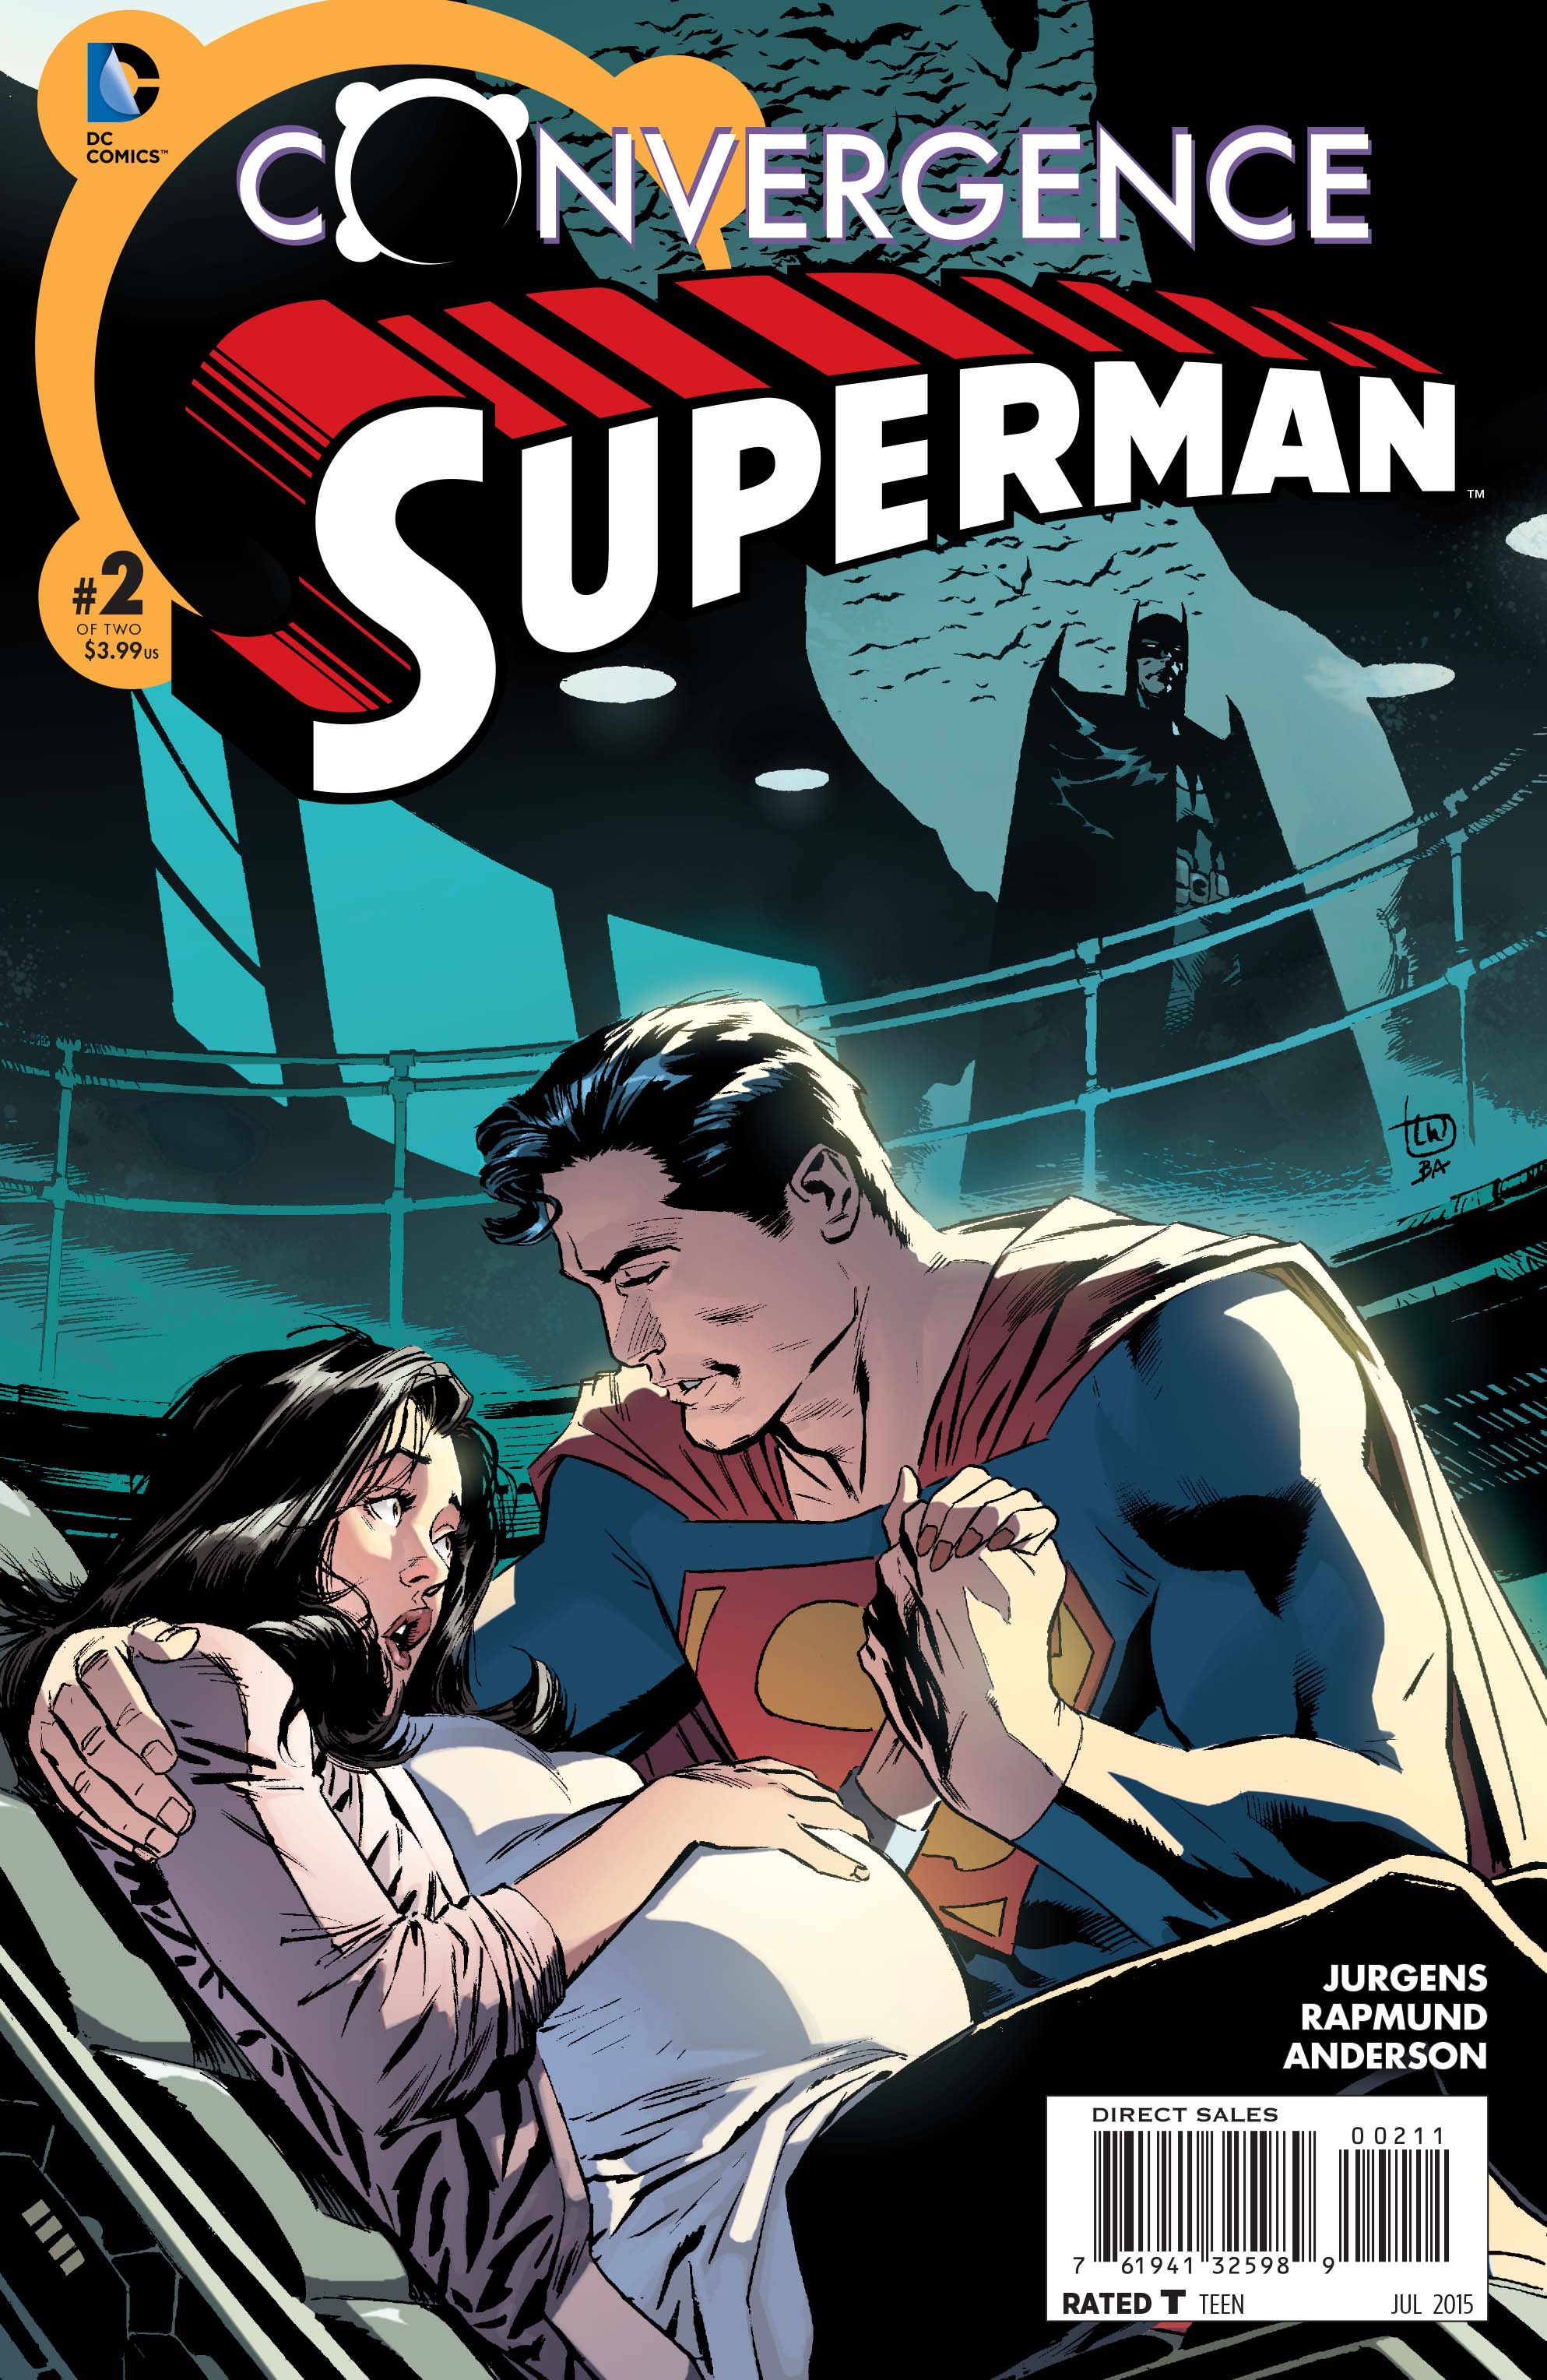 CONVERGENCE SUPERMAN #2